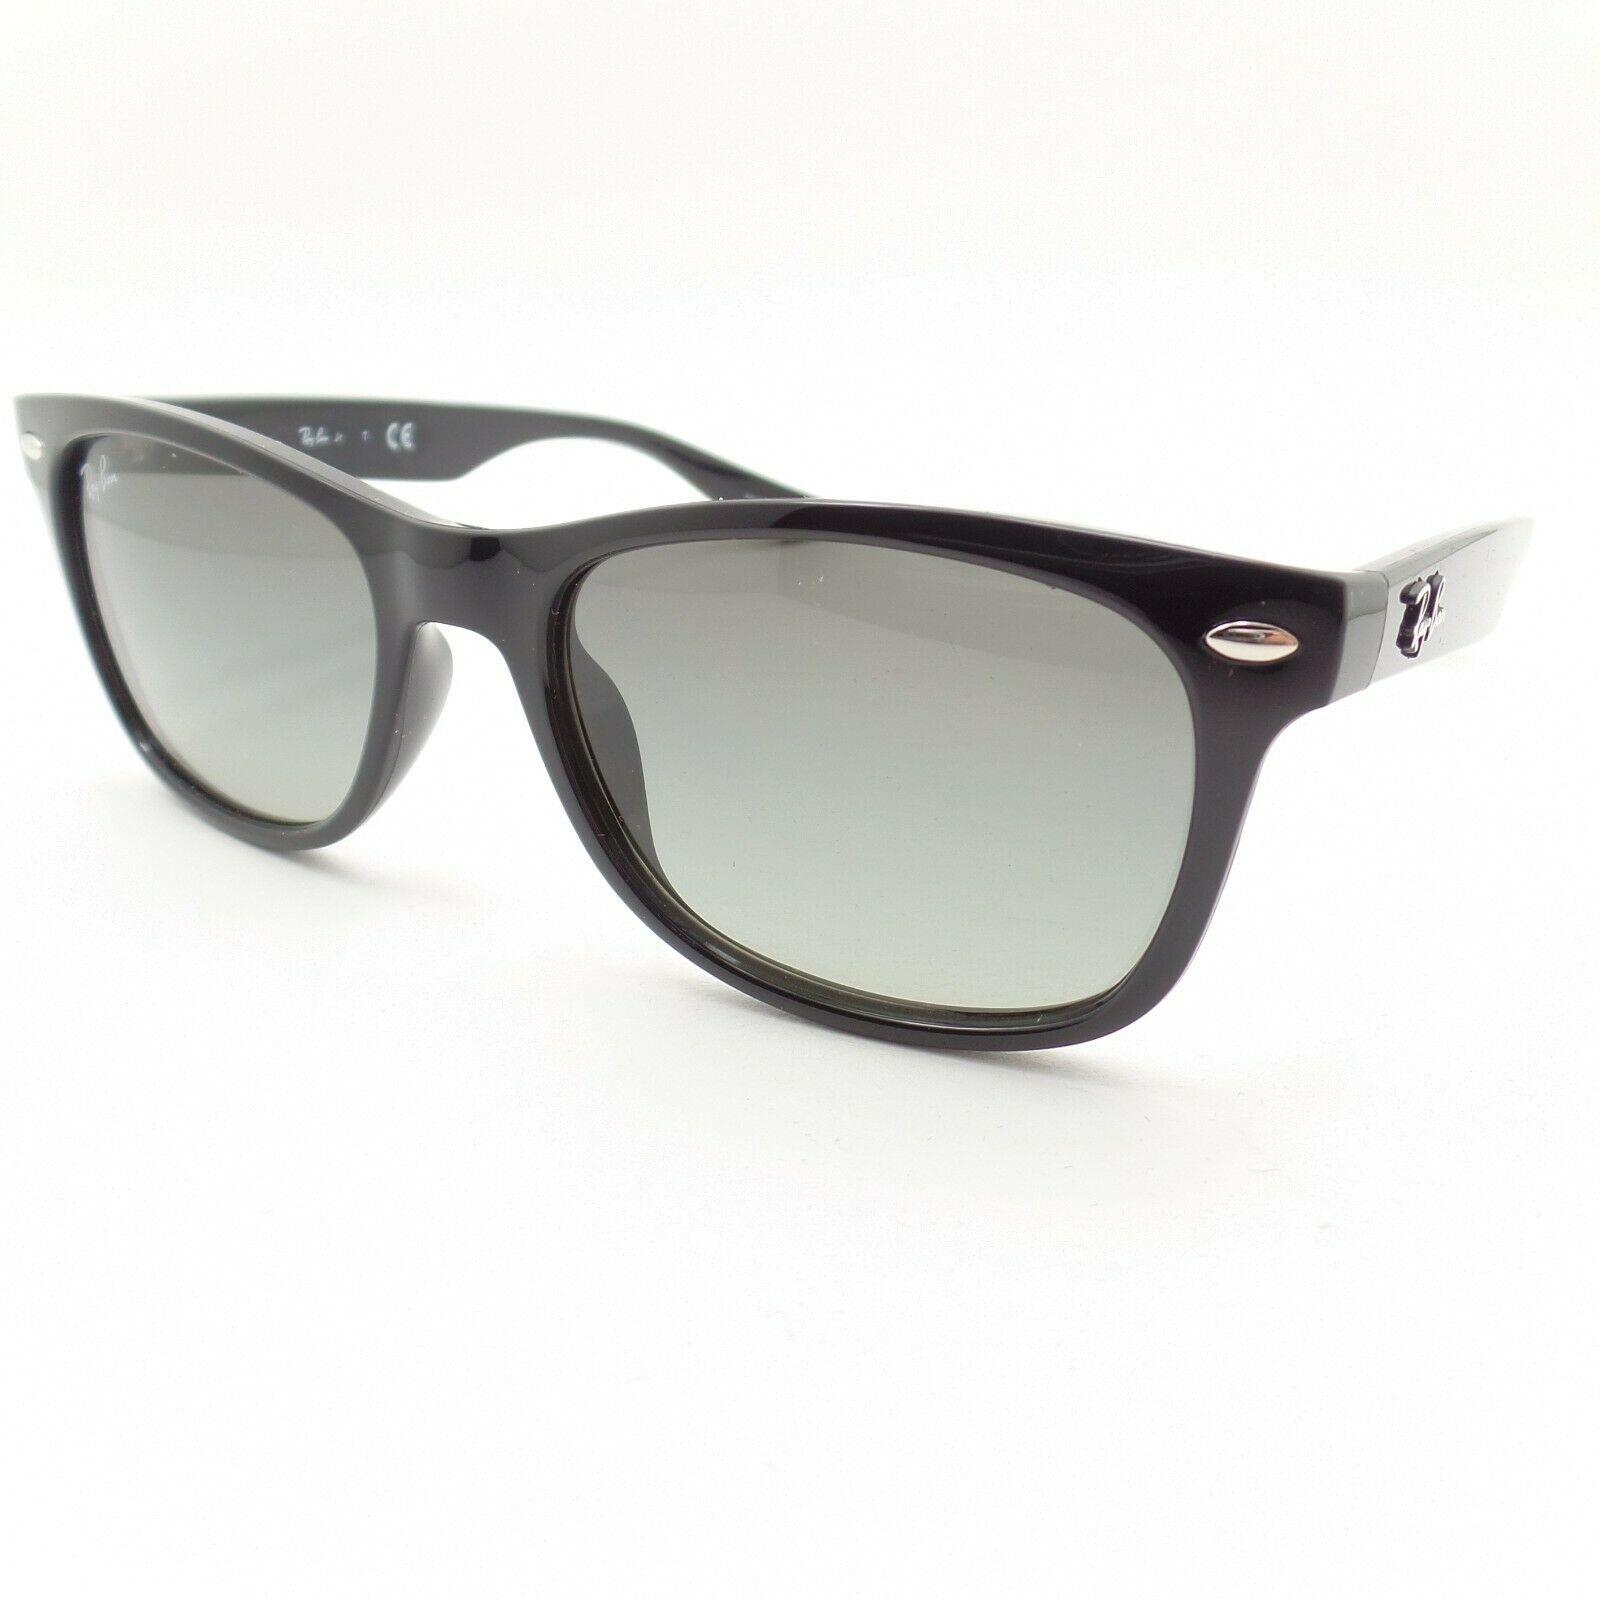 Ray-ban Ray Ban 9052 Kids Wayfarer 100/11 48mm Shiny Black Sunglasses ...